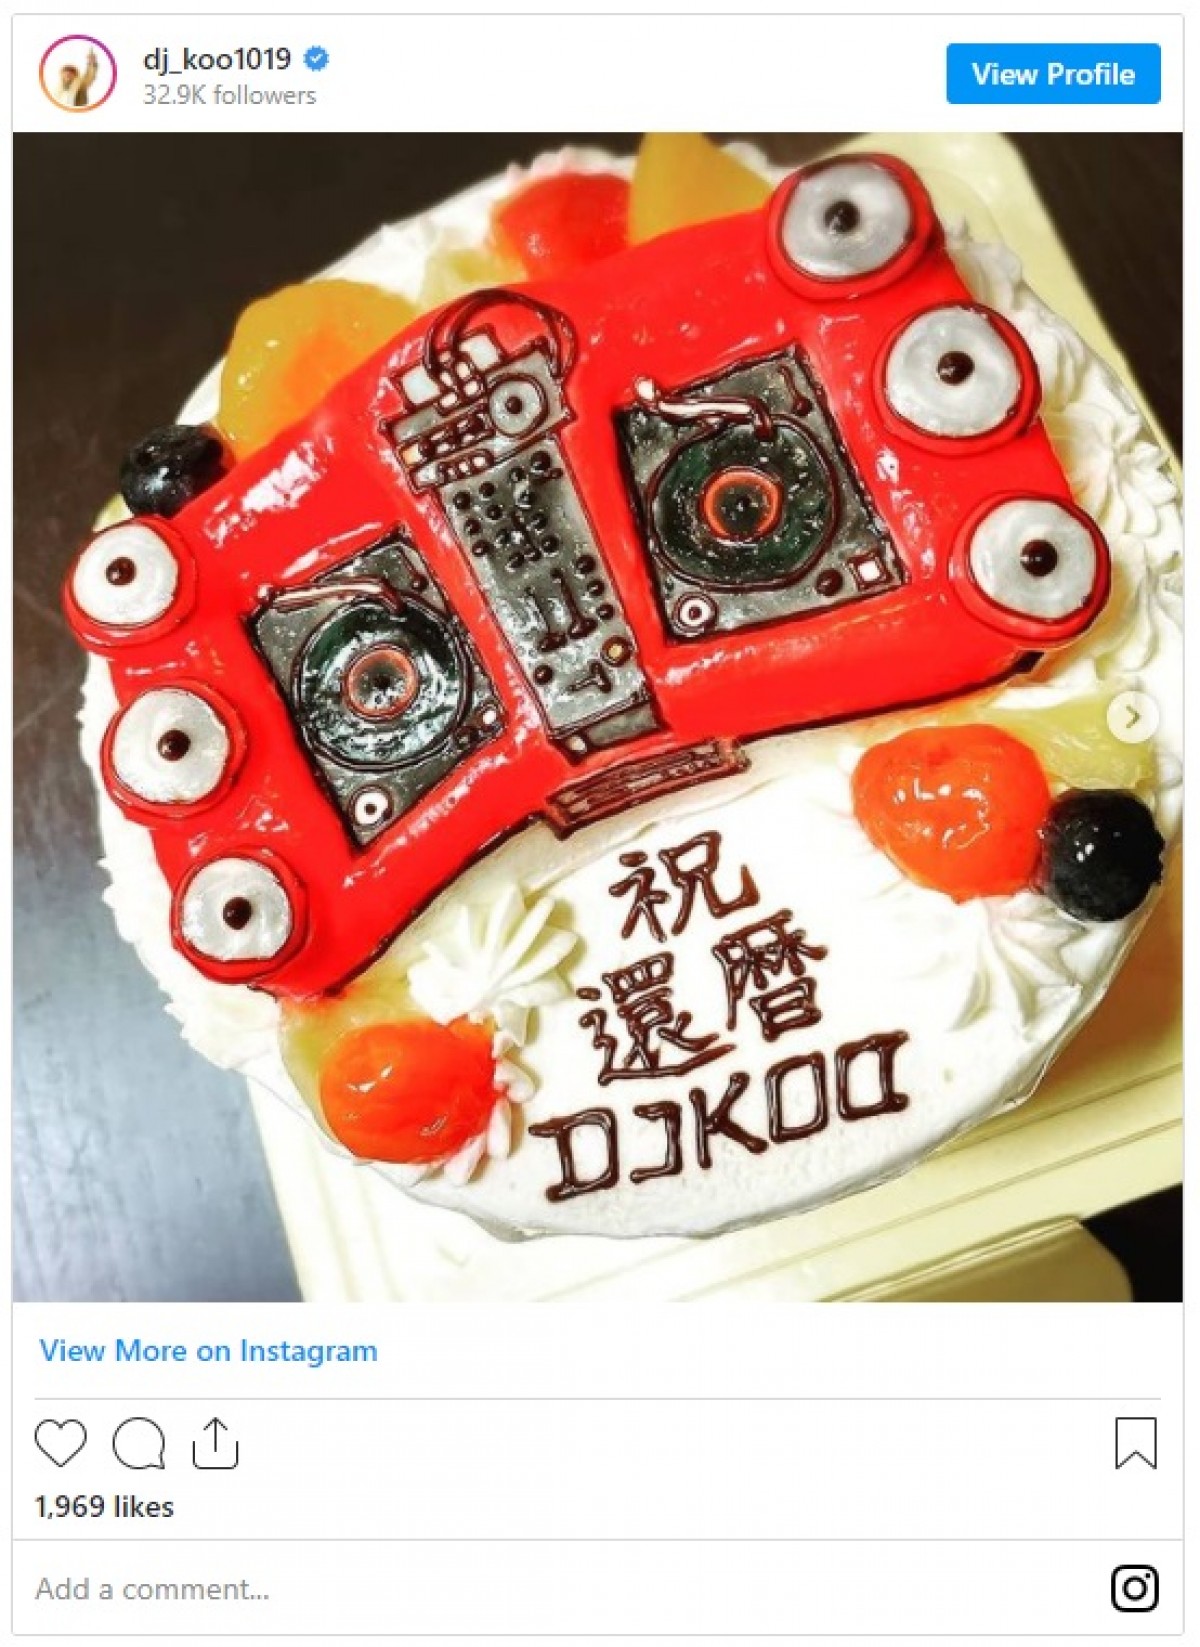 DJ KOOが還暦に　“ちゃんちゃんKOO”姿でお祝い　ファンも祝福